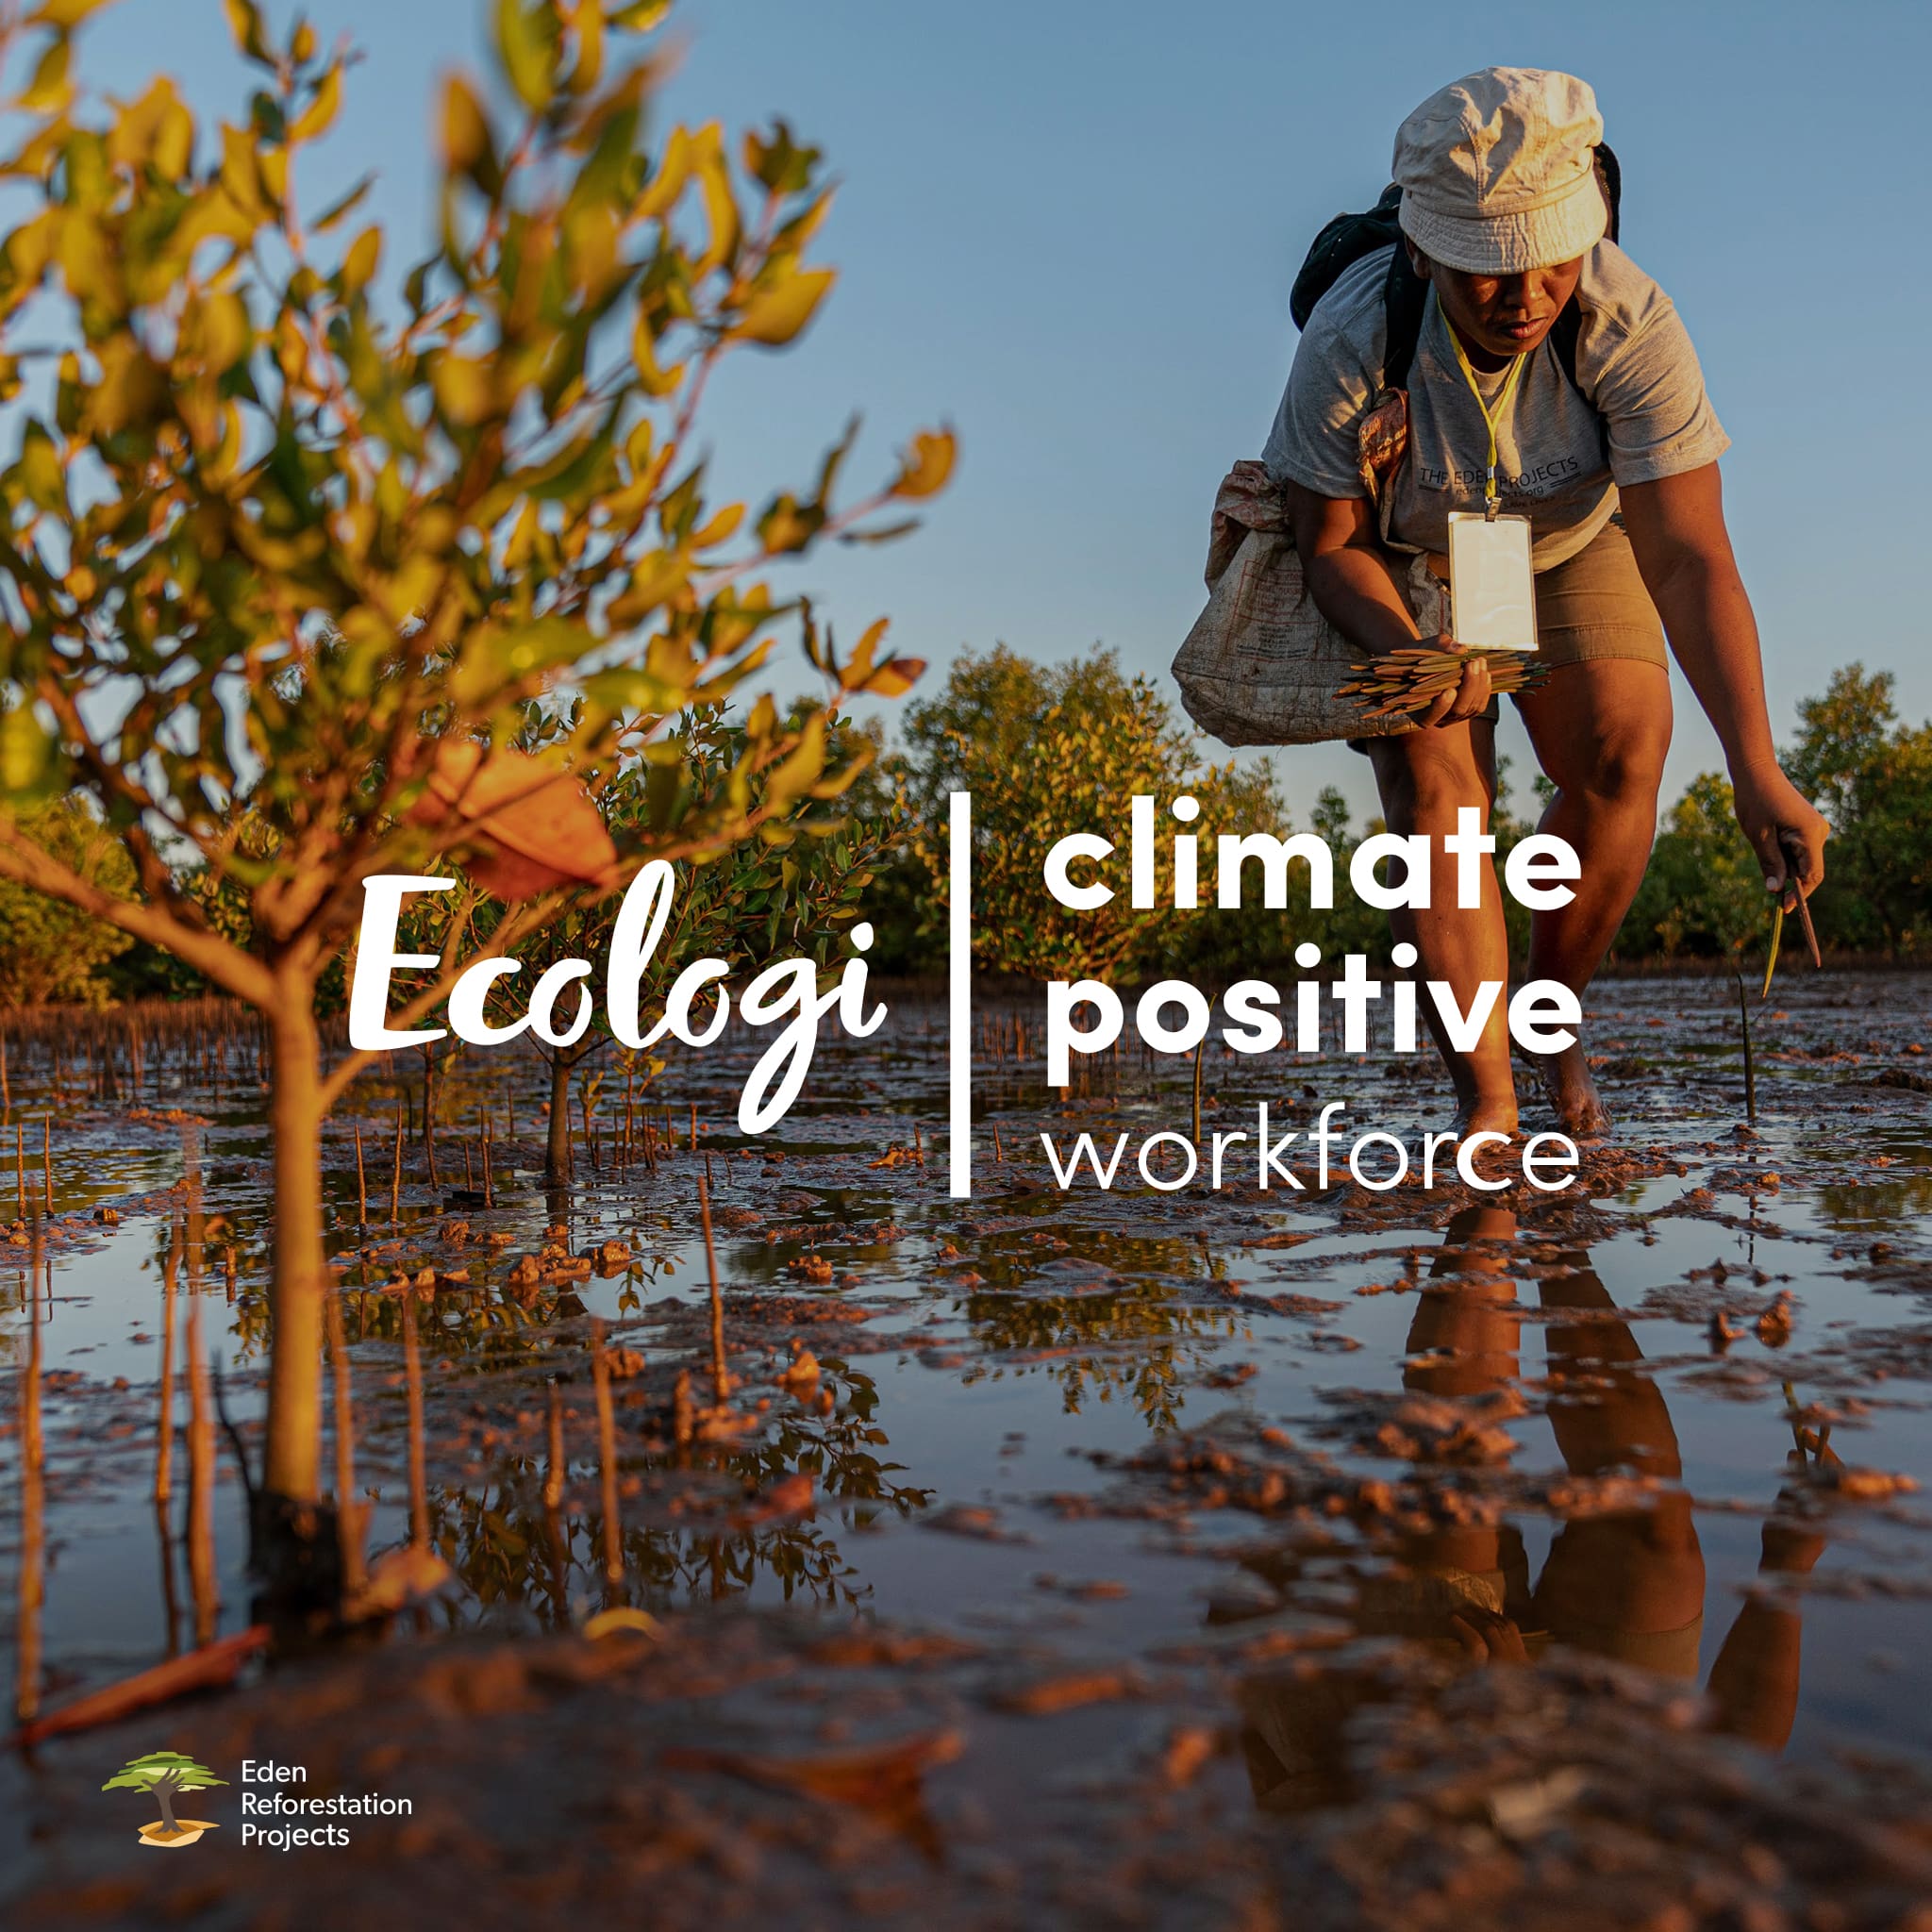 Ecologi climate positive workforce logo.